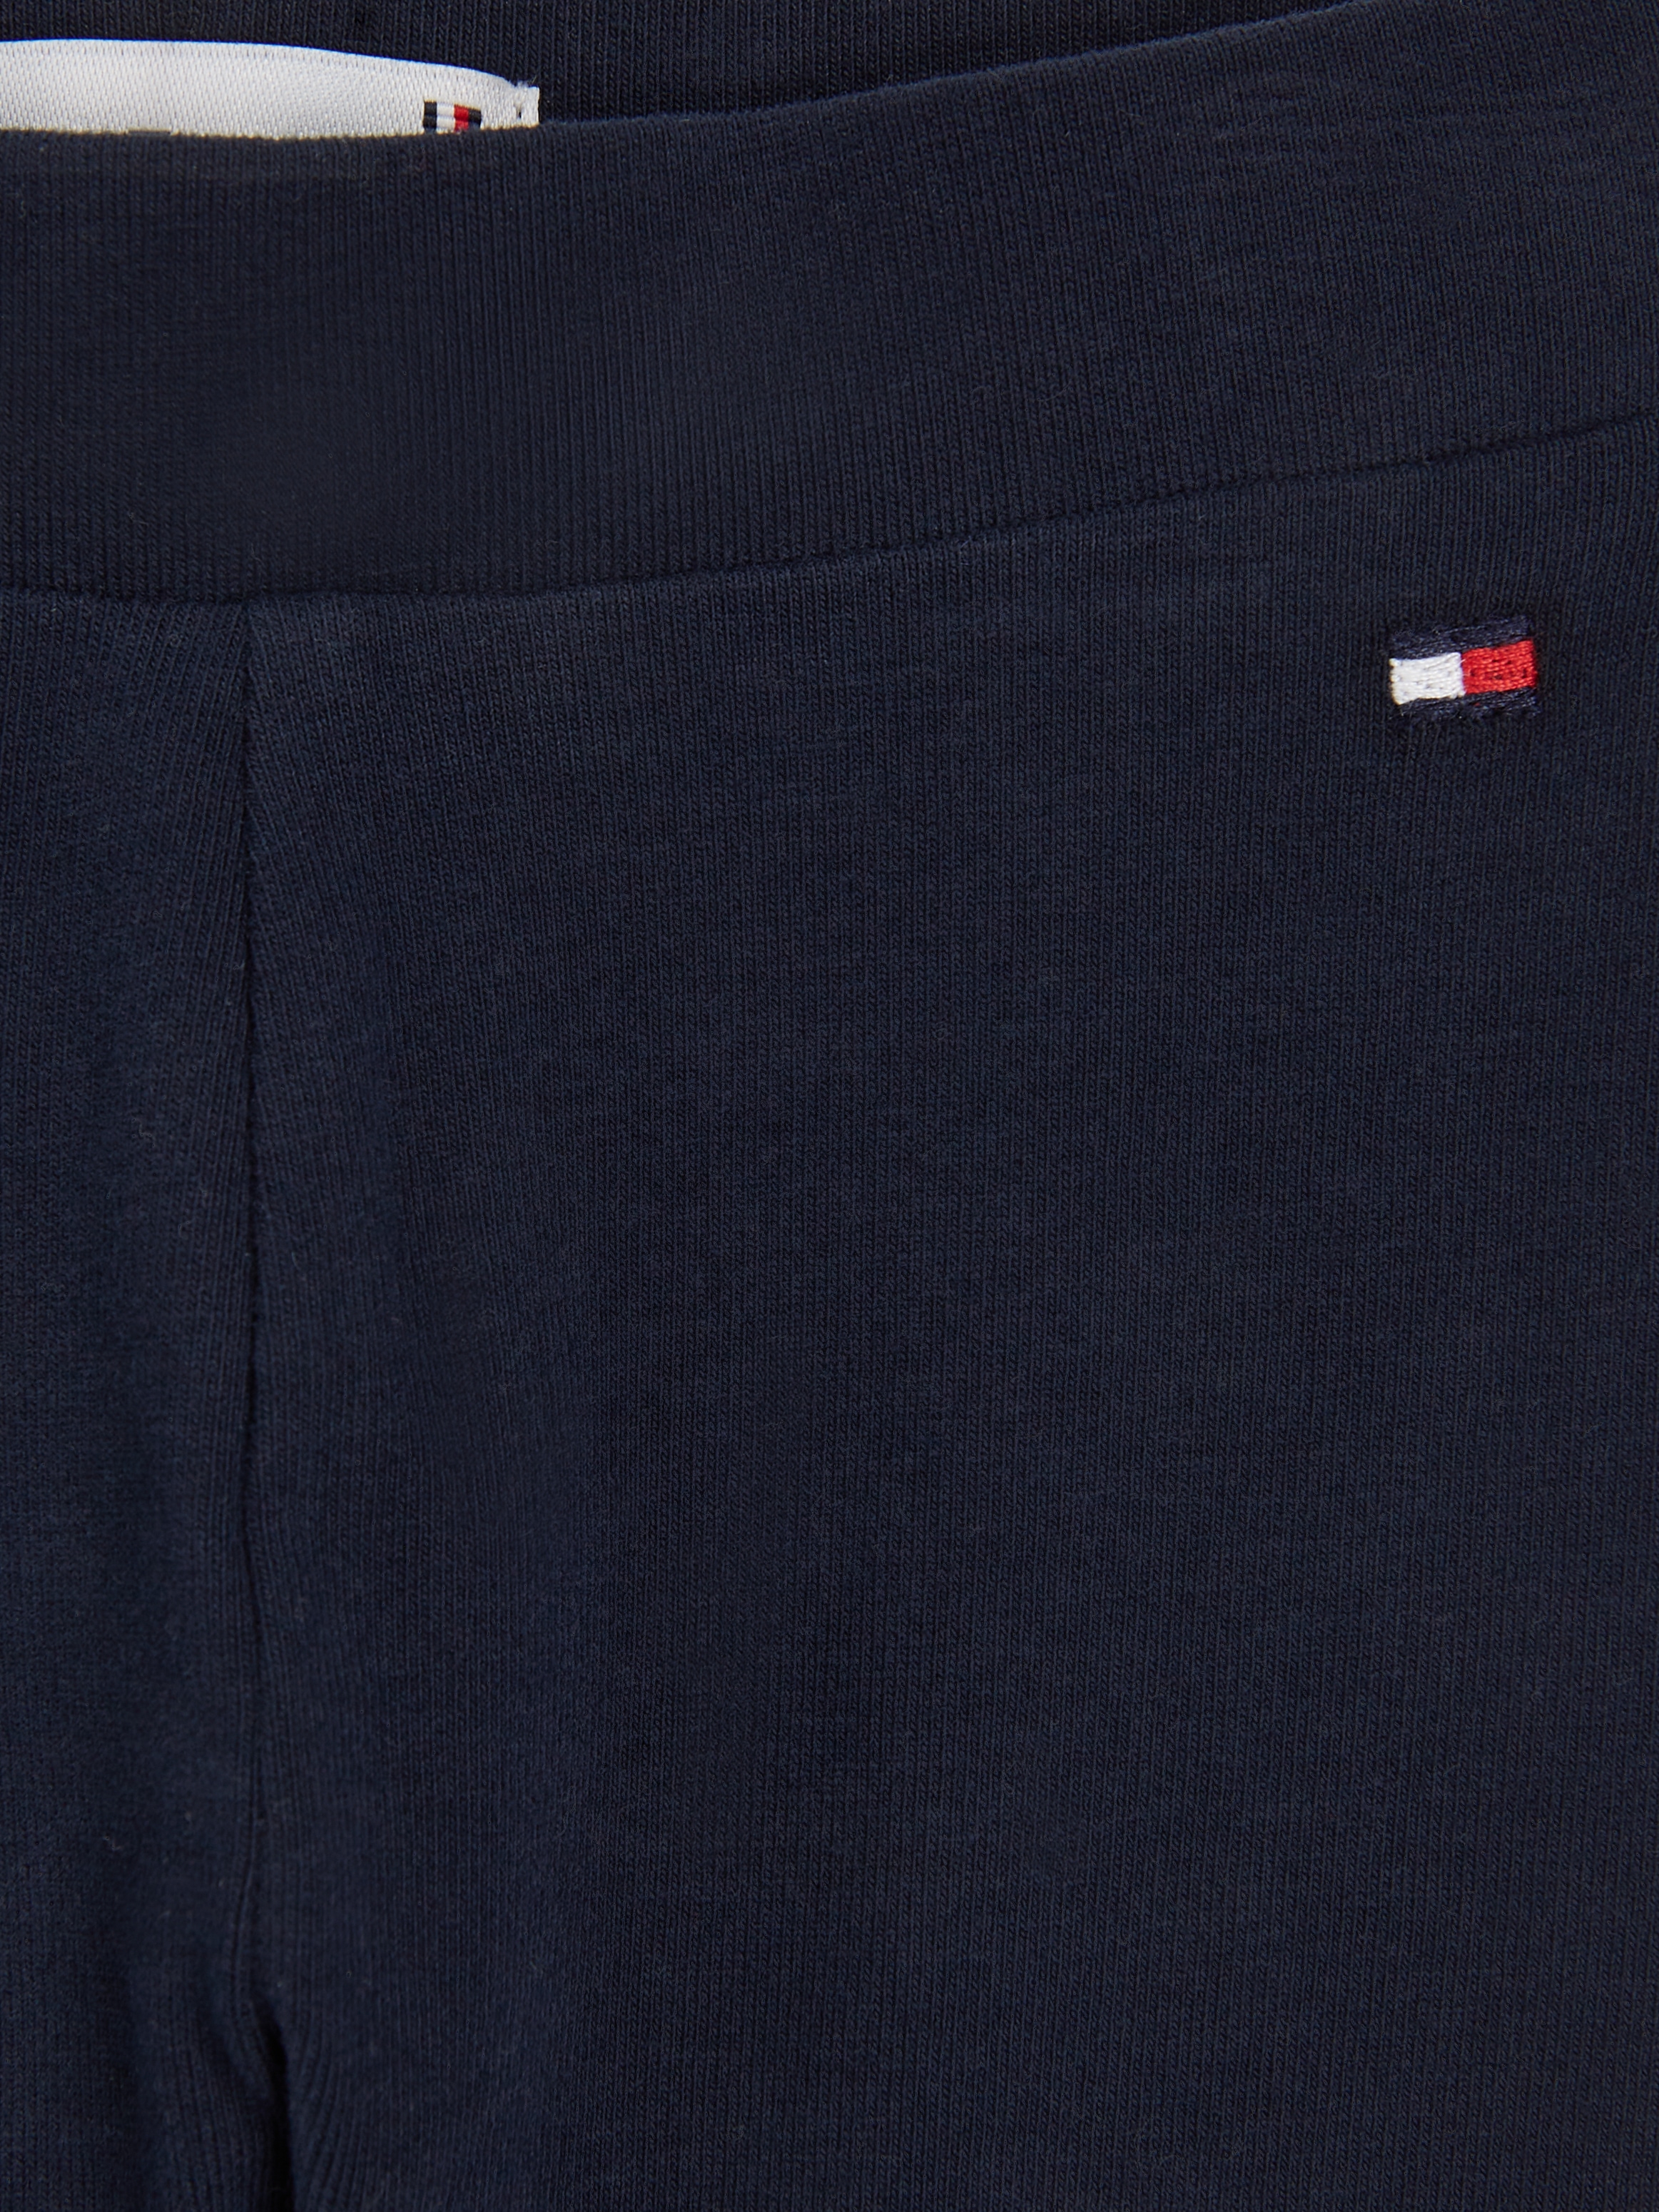 Modische Tommy Hilfiger Leggings TH Logoschriftzug mit LEGGINGS«, shoppen versandkostenfrei »BABY LOGO